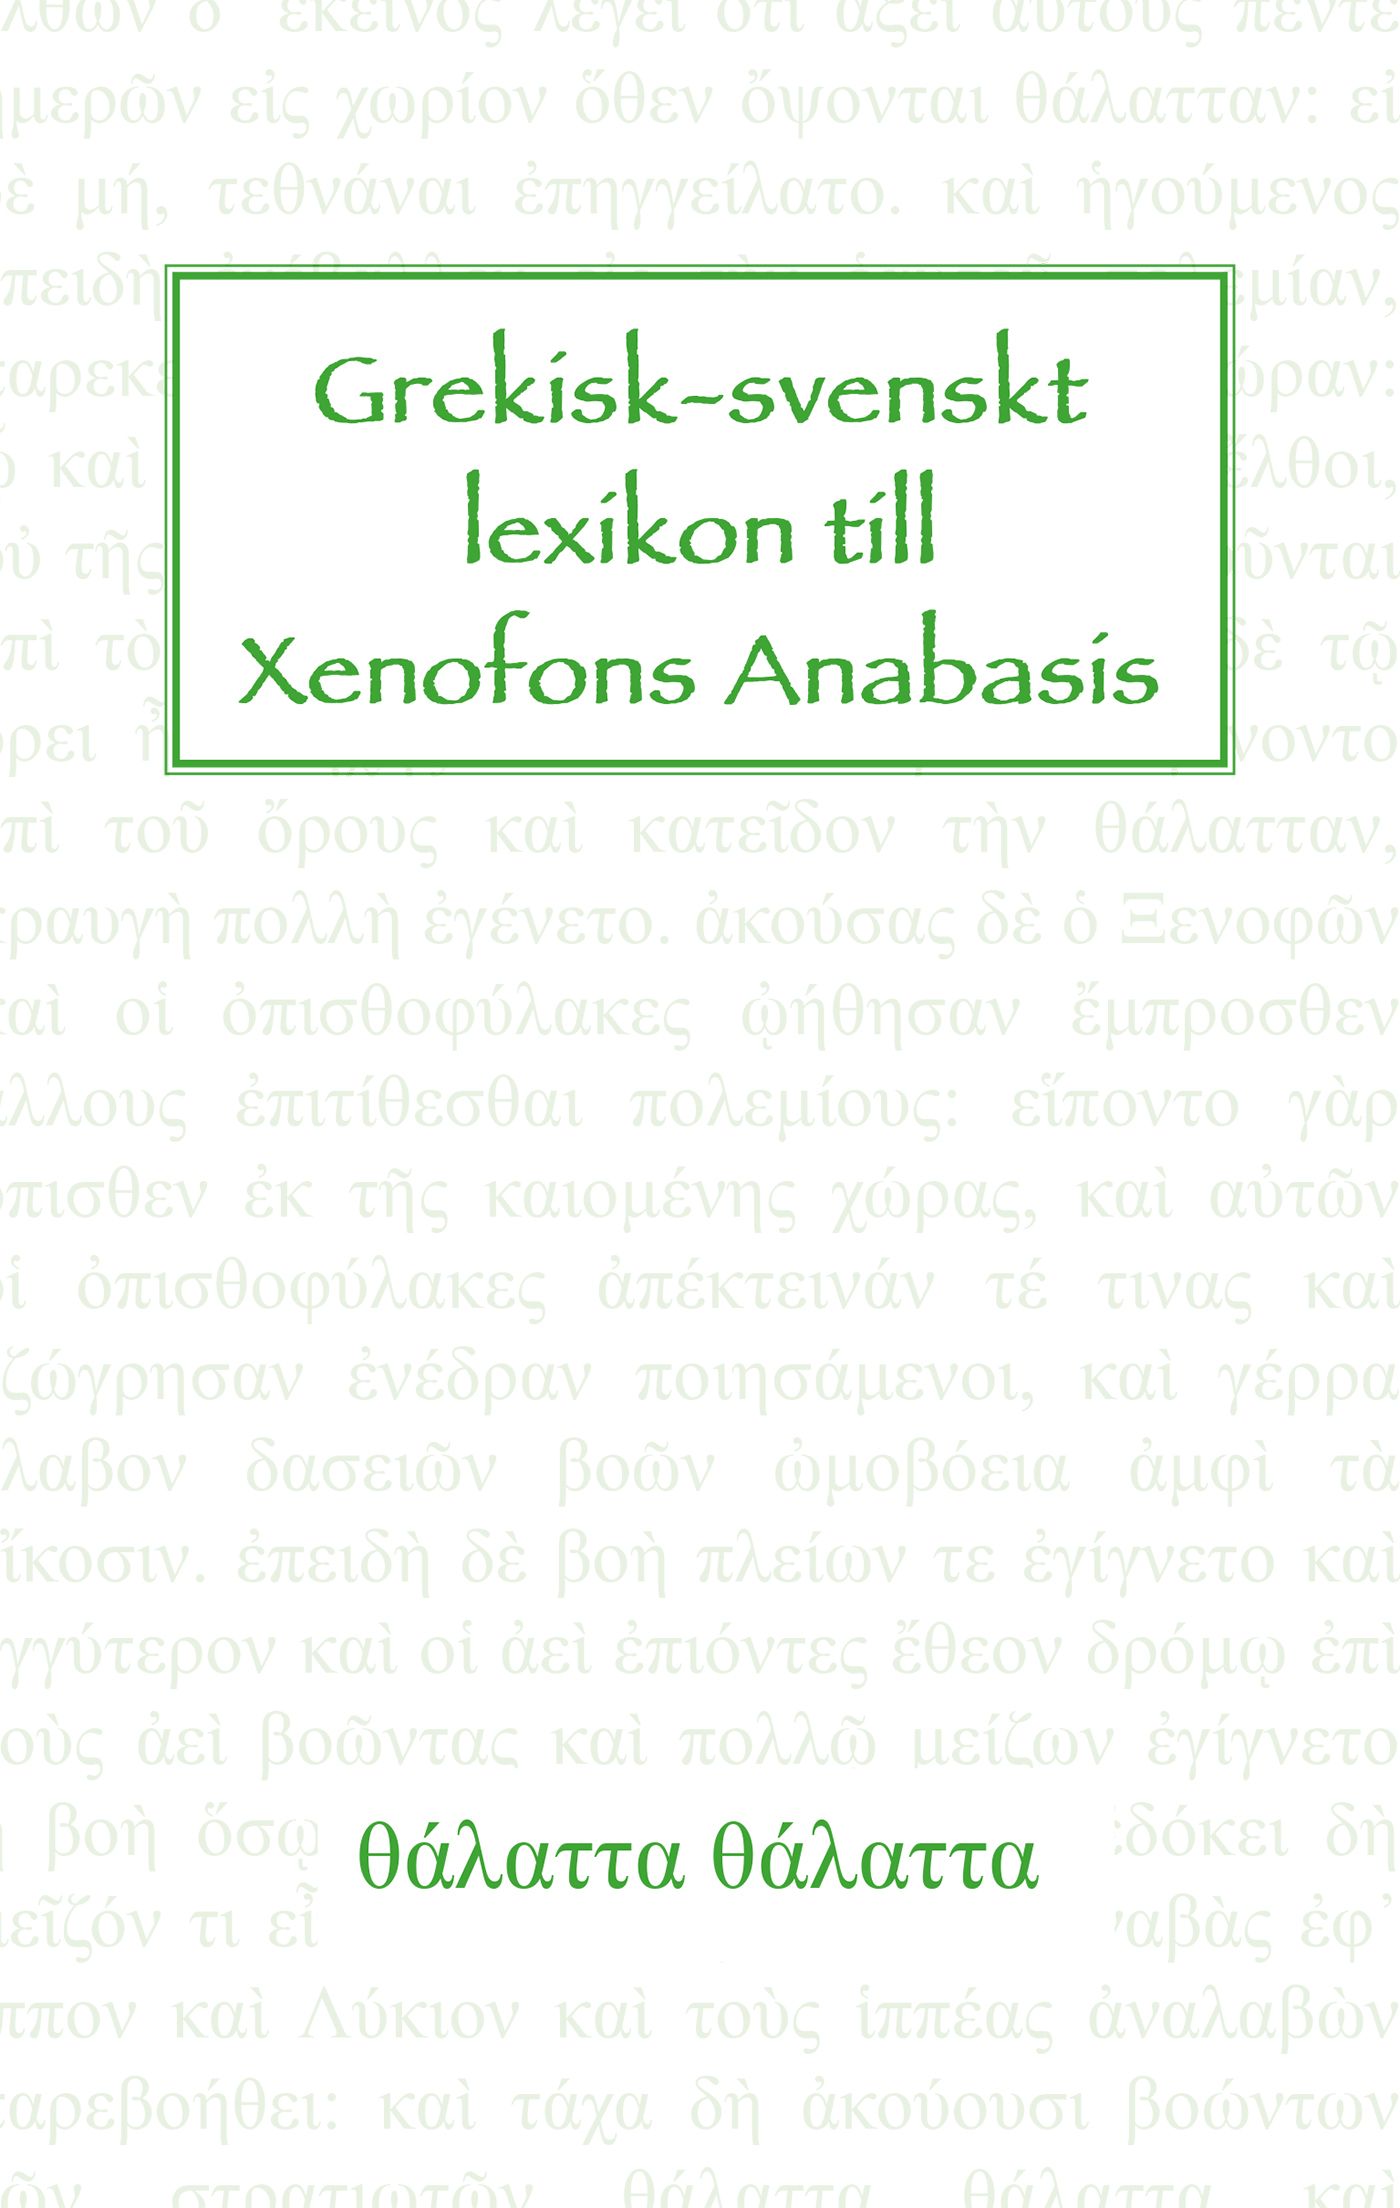 Grekisk-svenskt lexikon till Xenofons Anabasis, eBook by L. A. A. Aulin